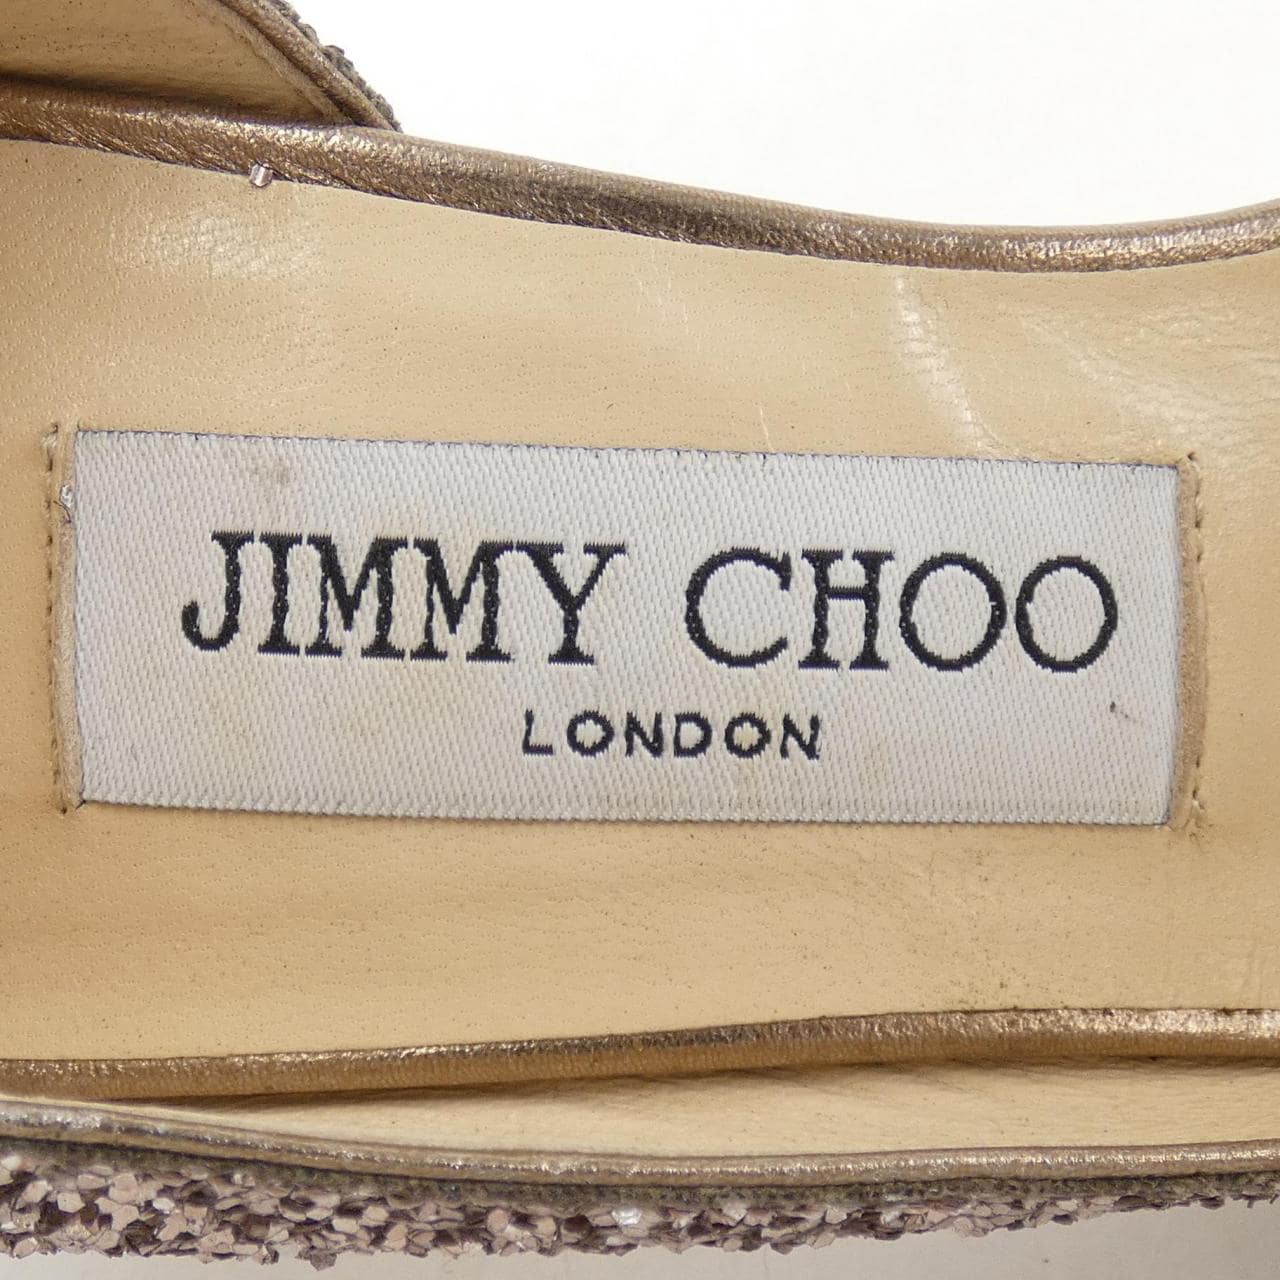 JIMMY CHOO CHOO shoes